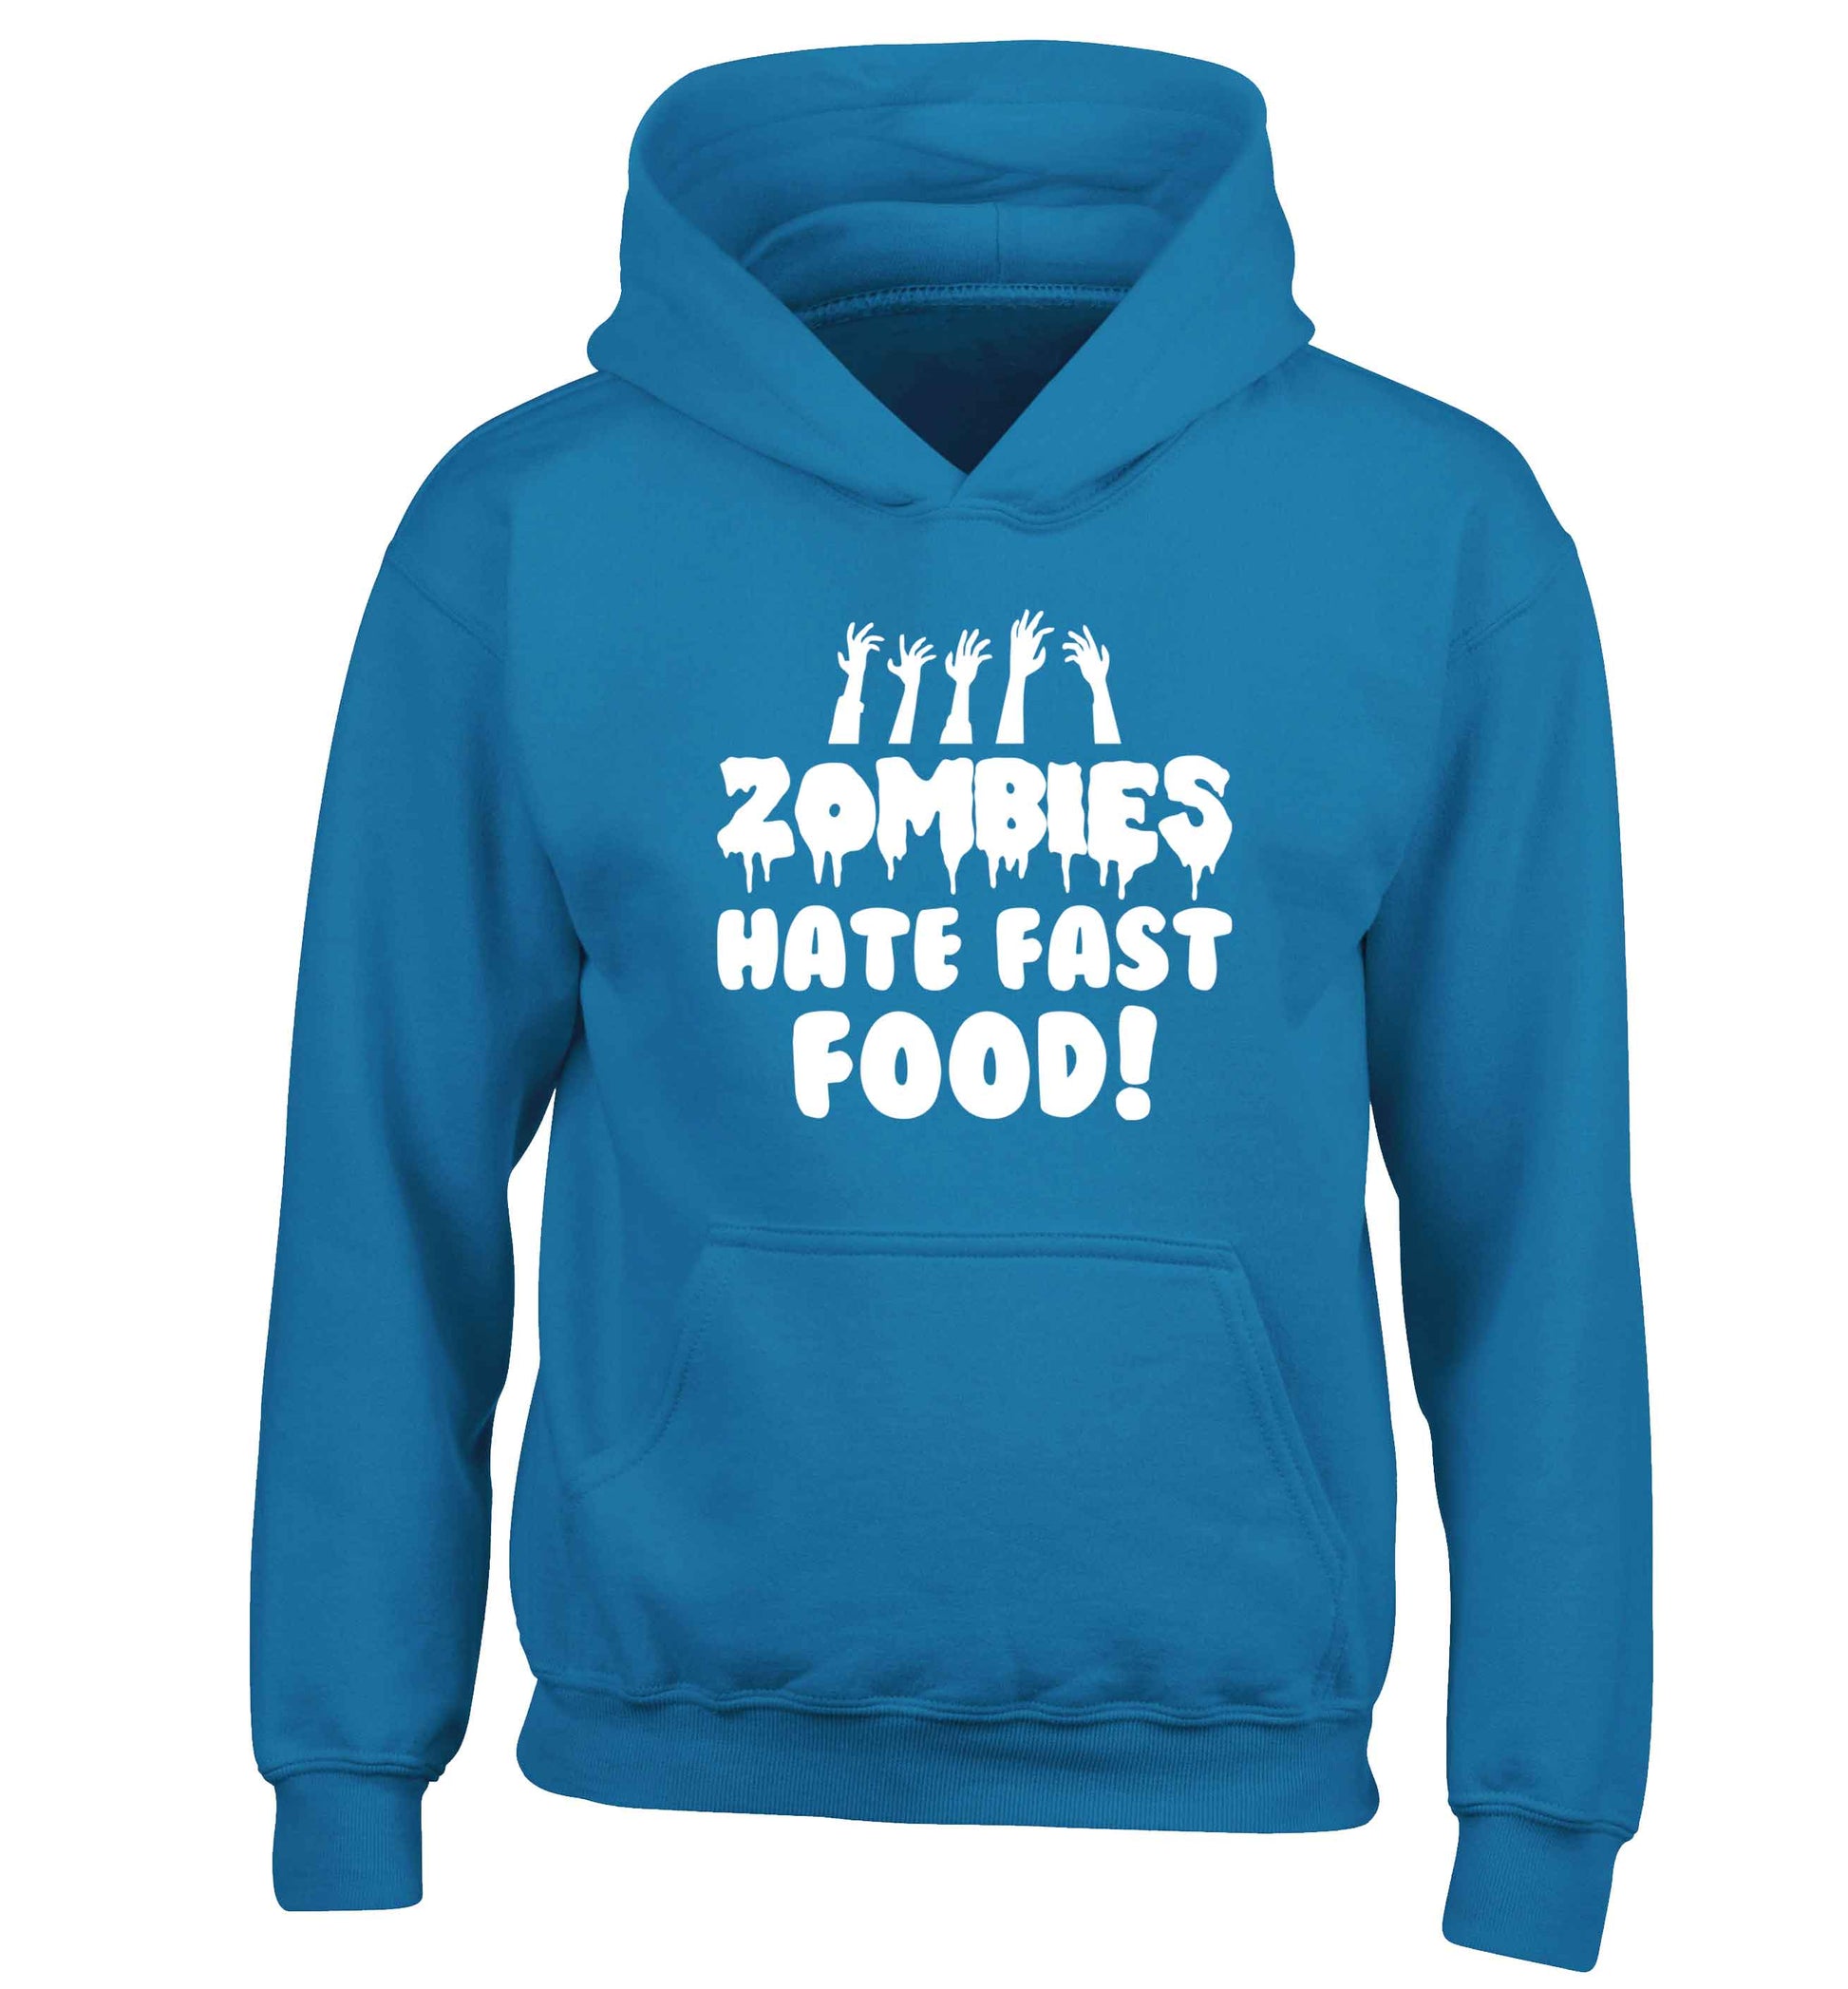 Zombies hate fast food children's blue hoodie 12-13 Years